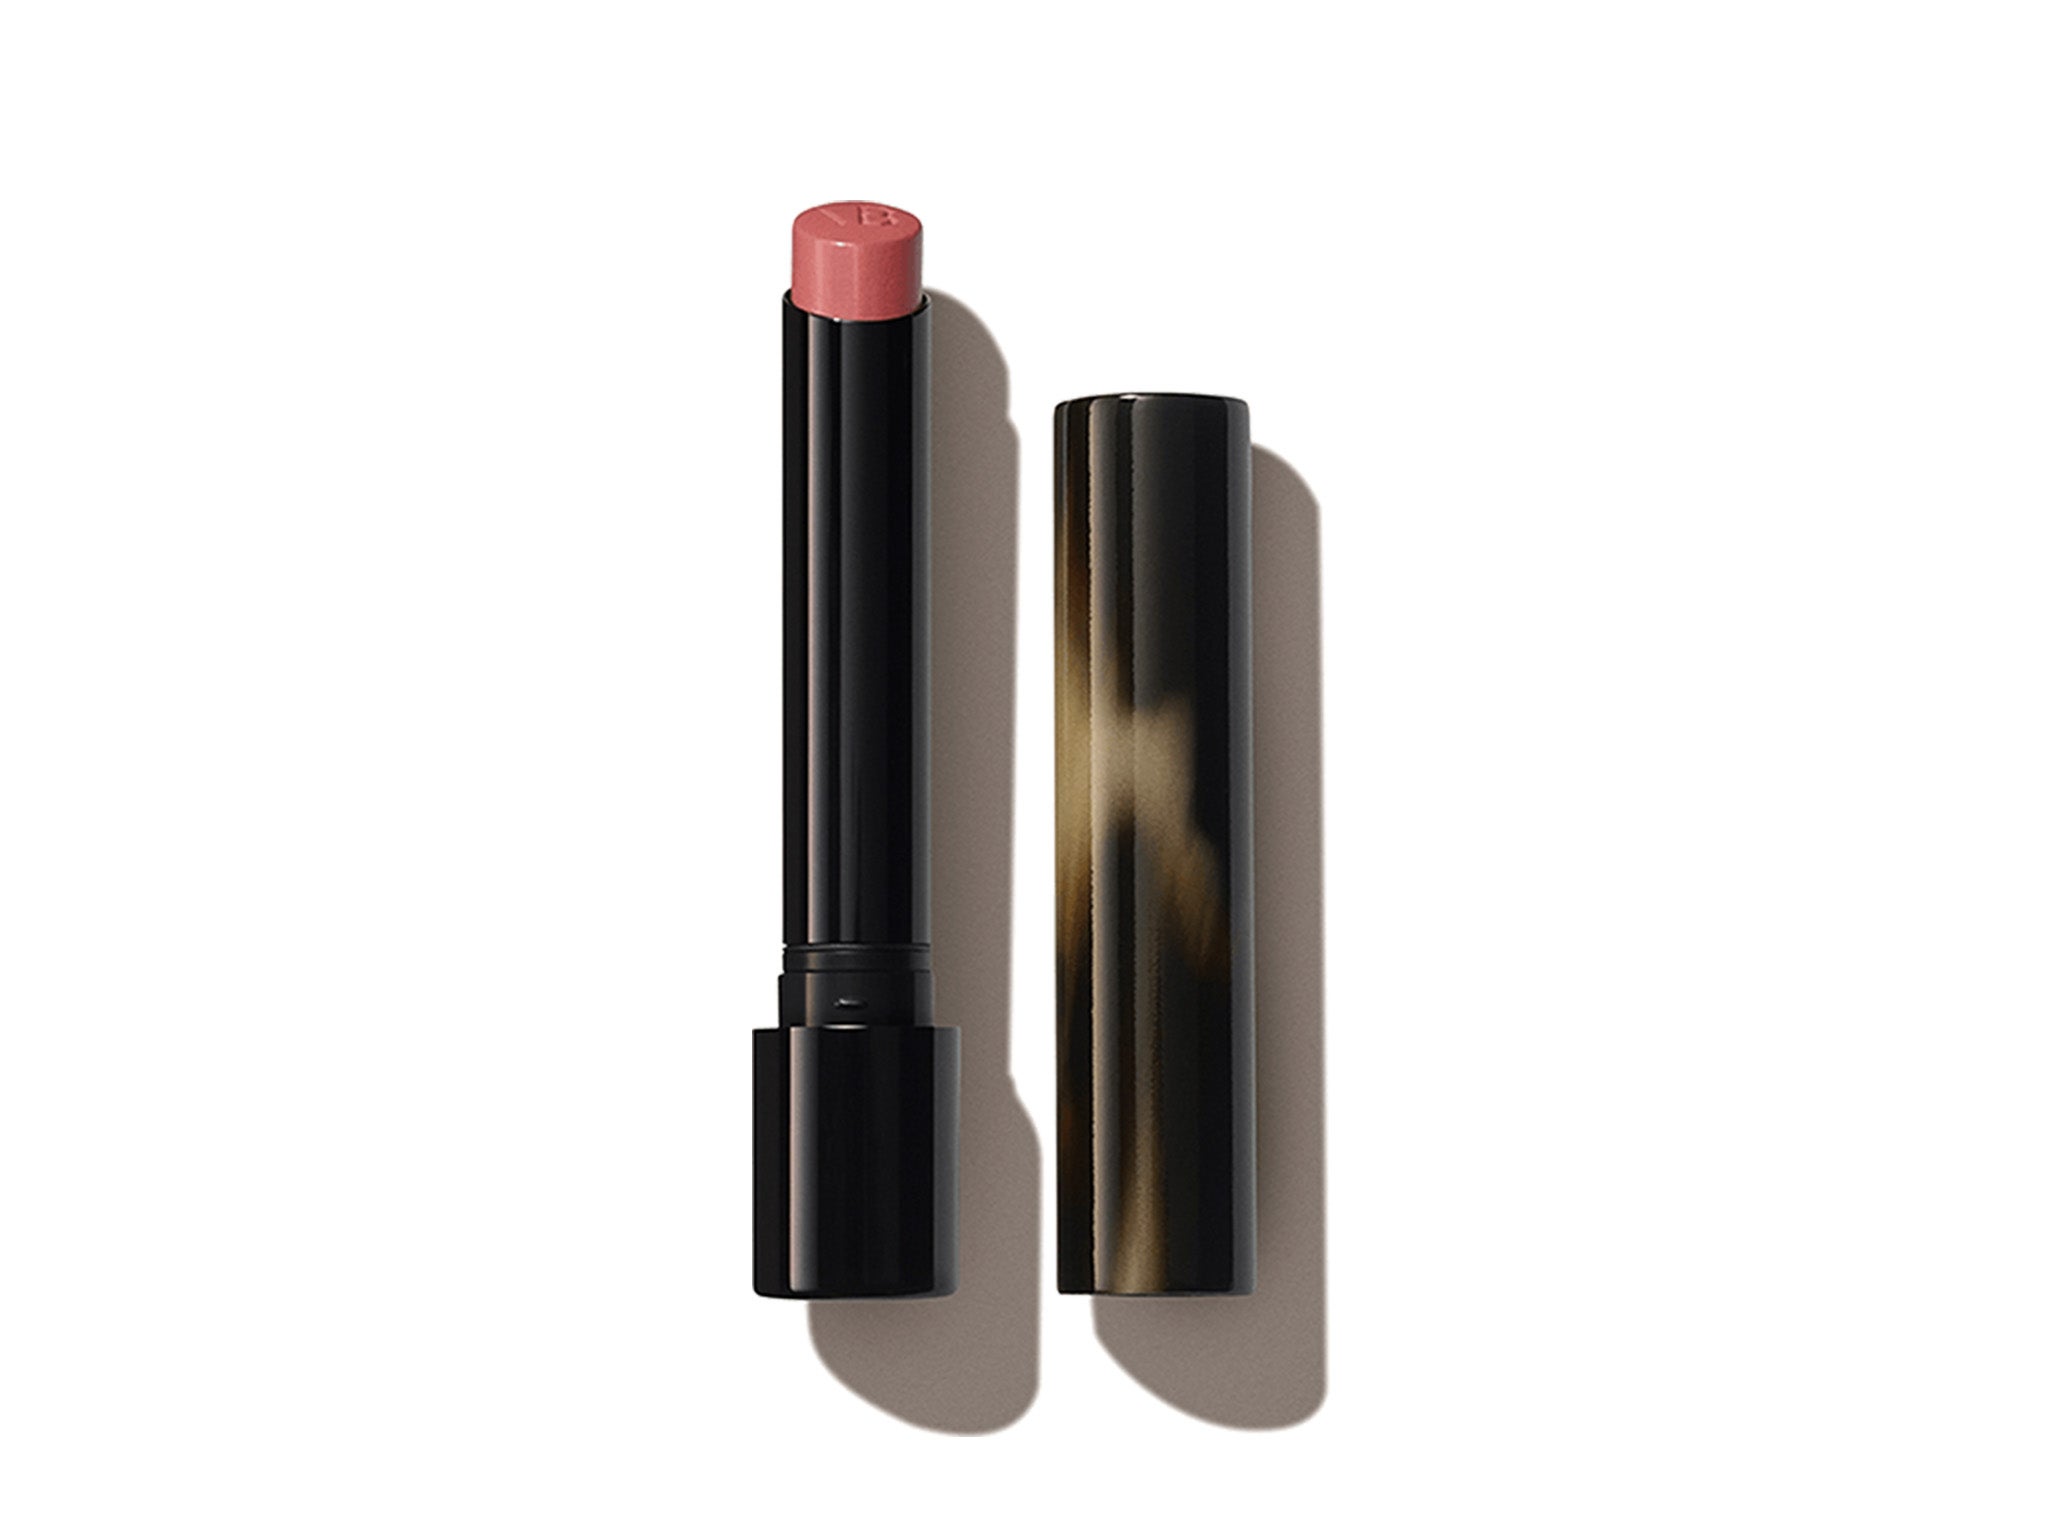 Victoria Beckham Beauty Posh lipstick